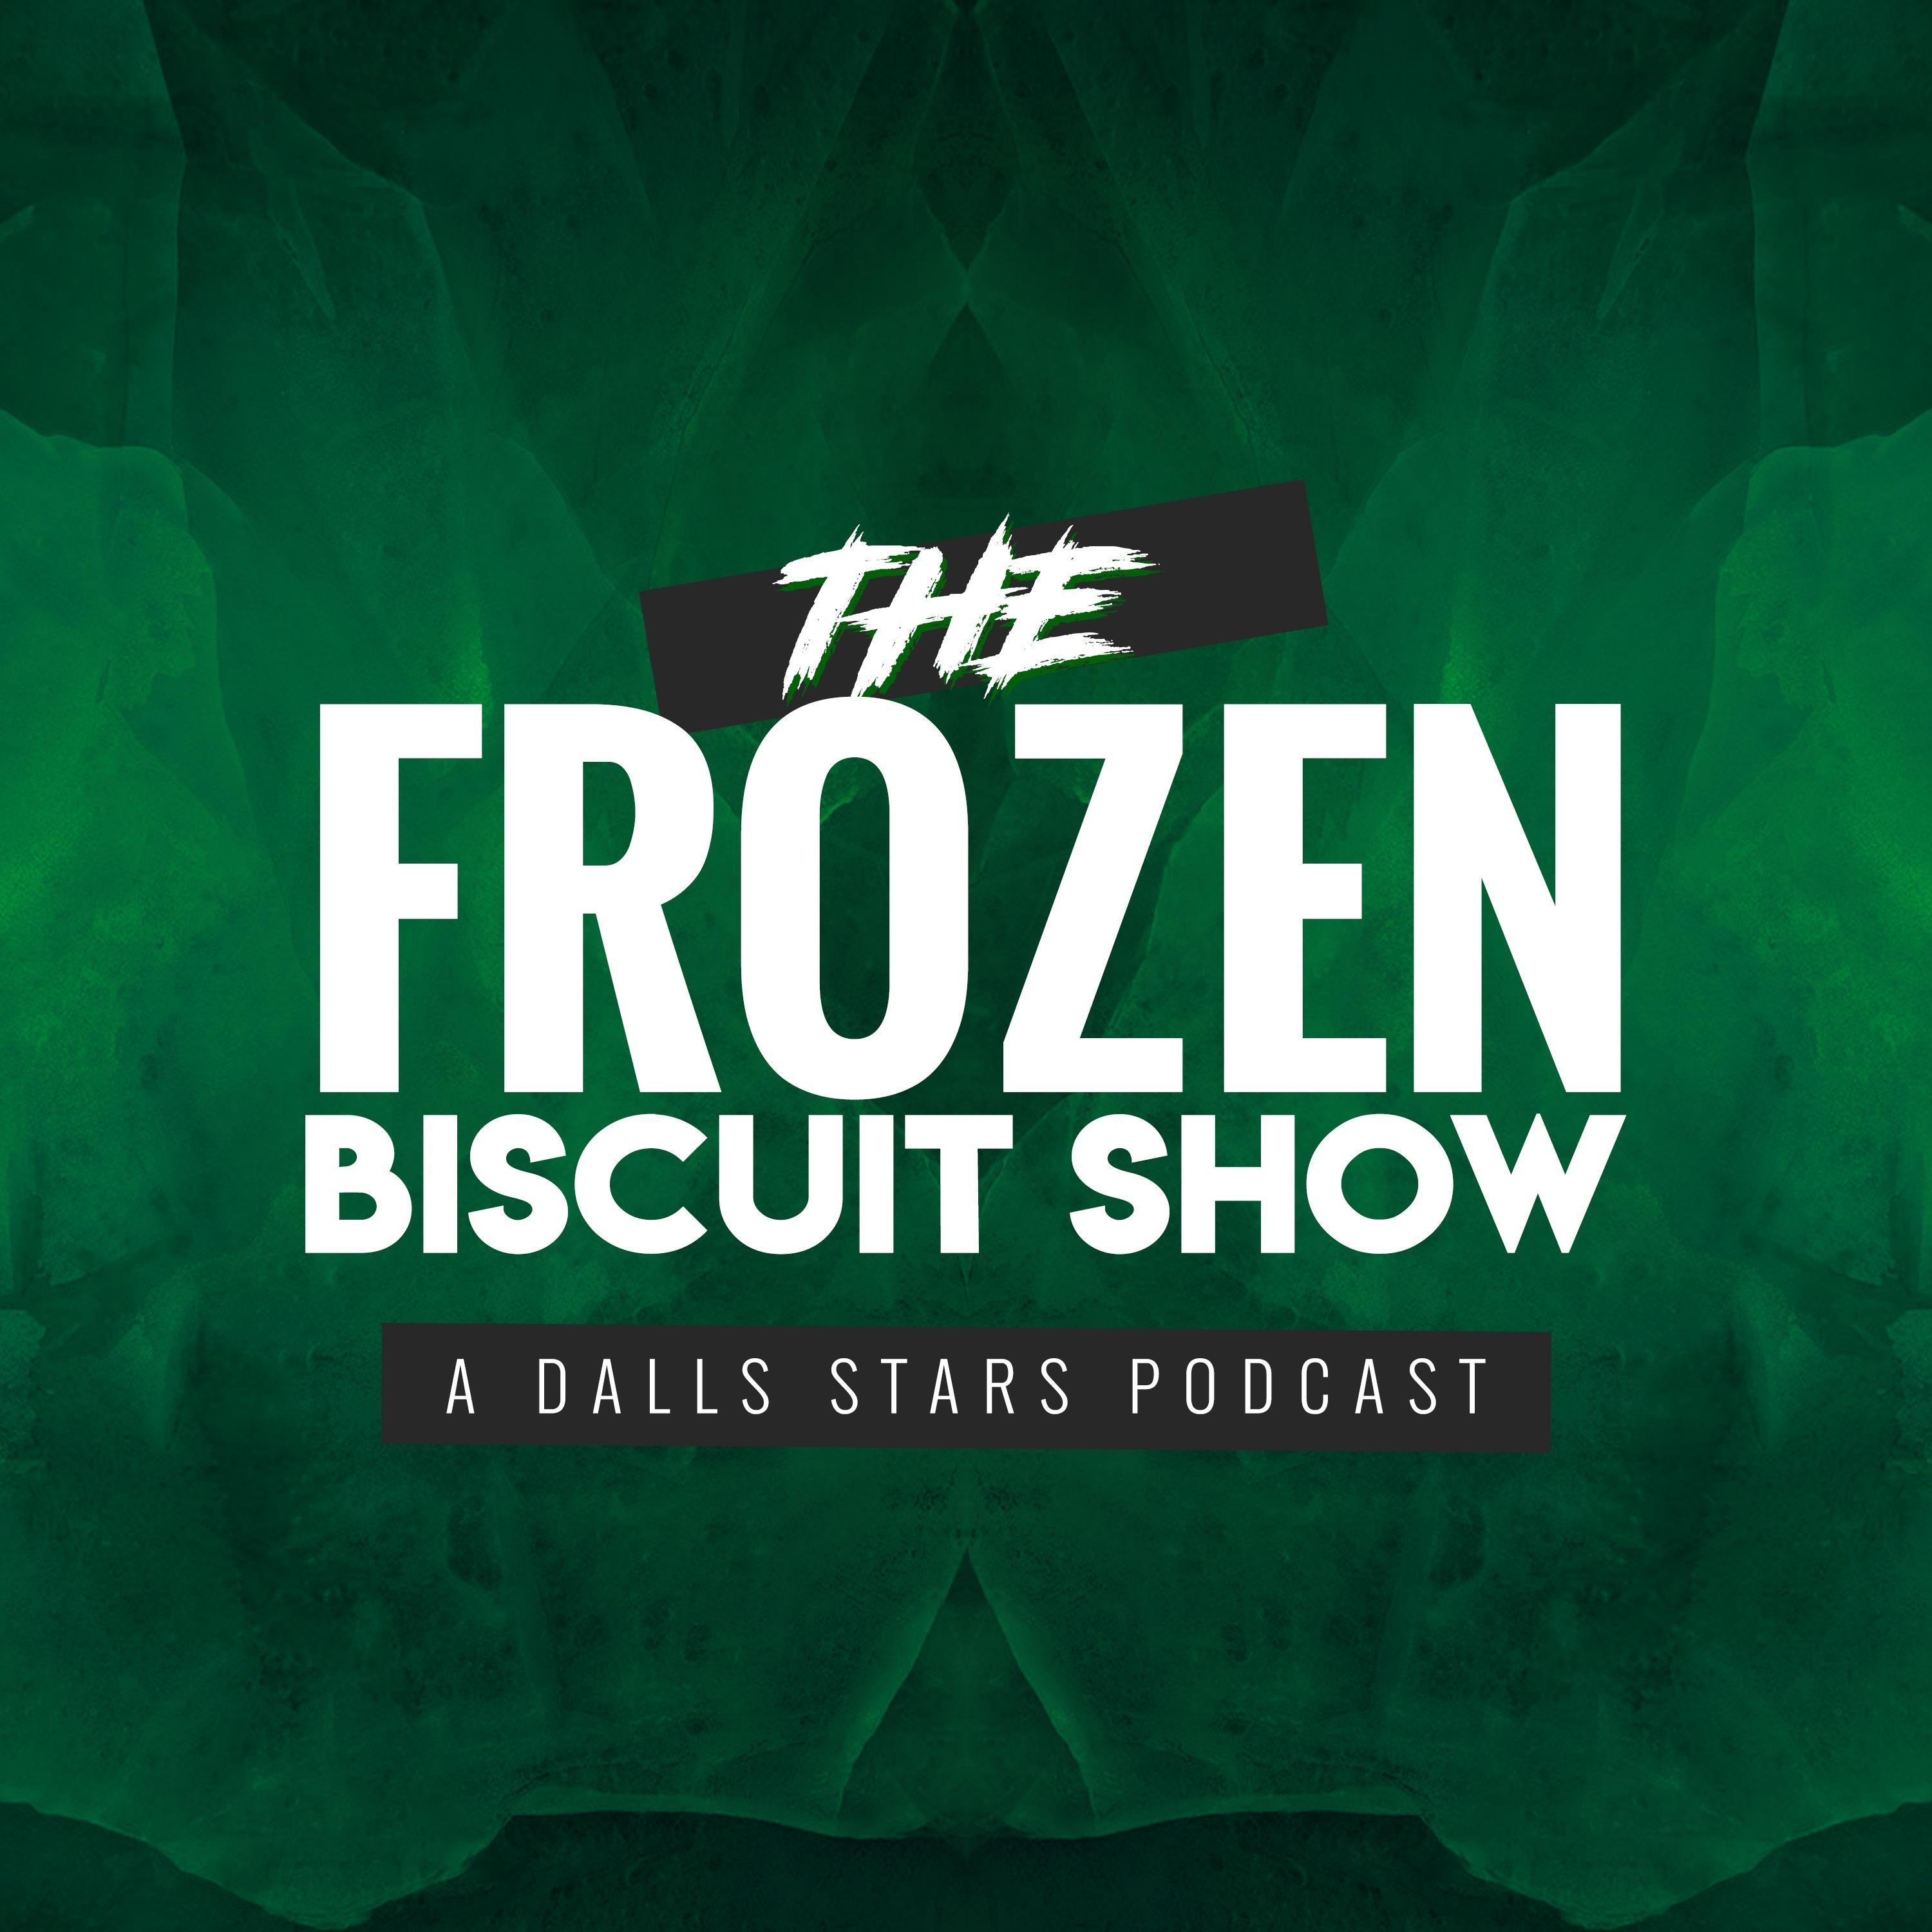 The Frozen Biscuit Show